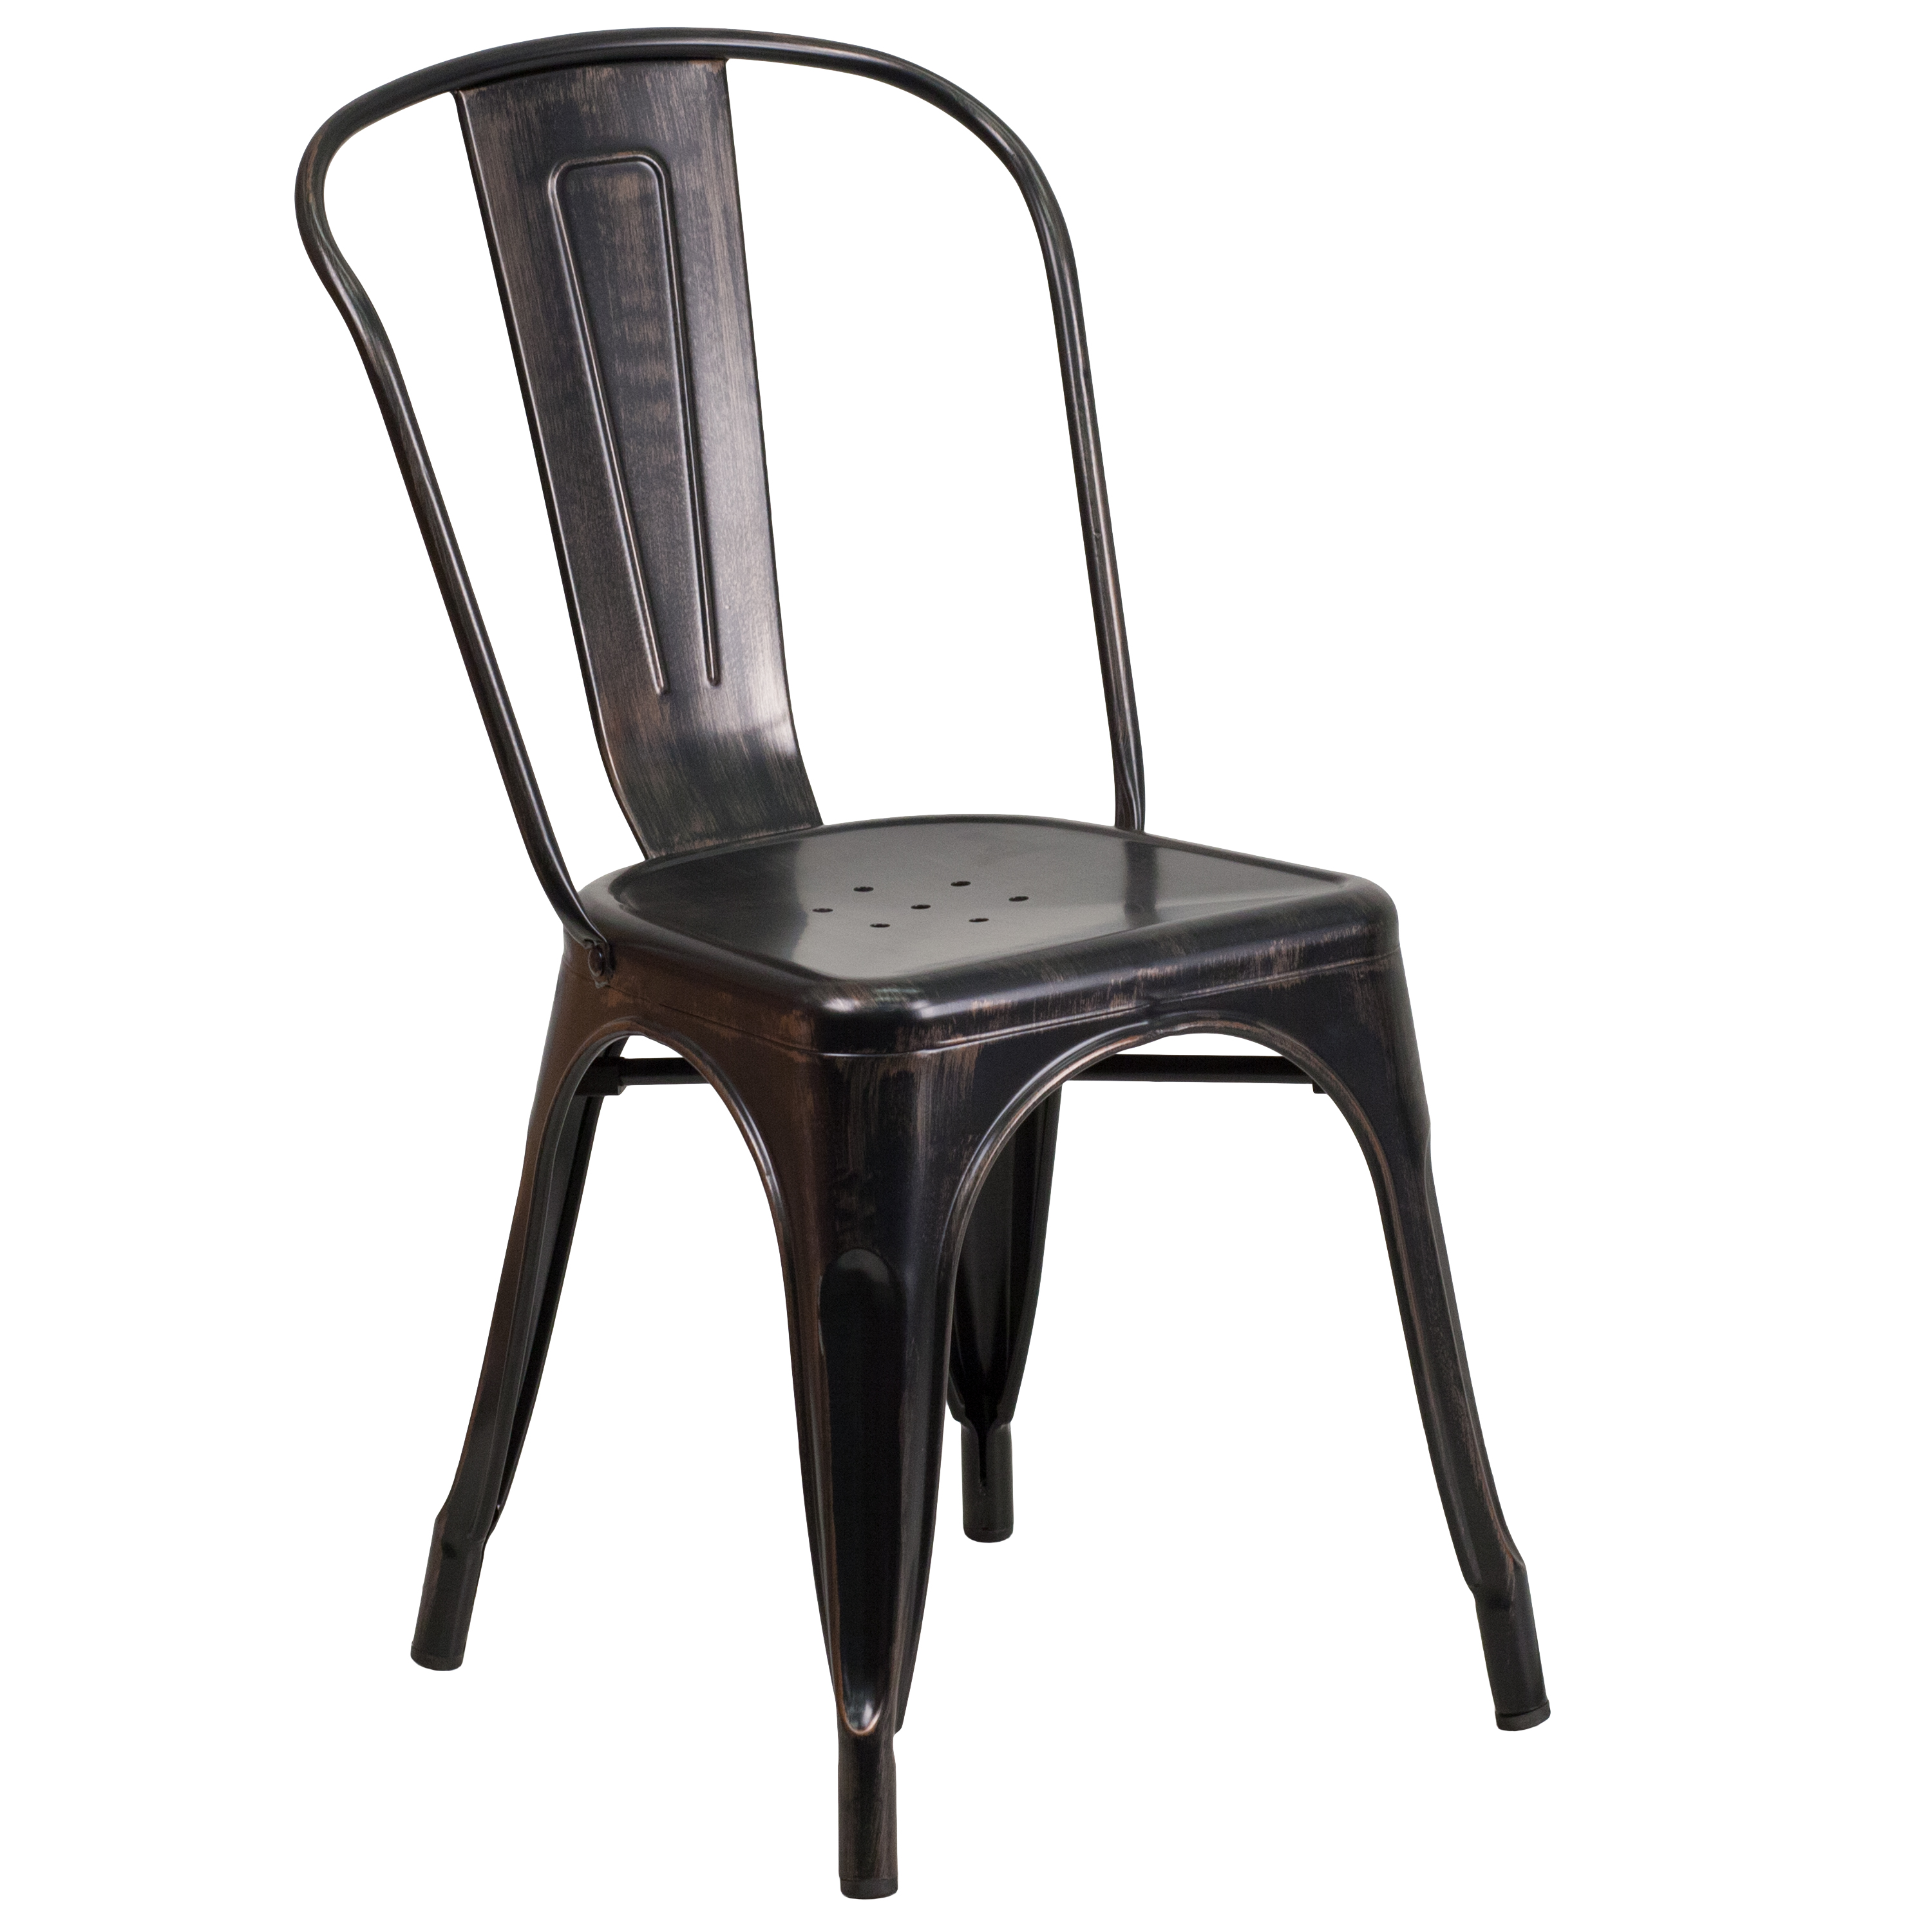 Flash Furniture CH-31230-BQ-GG Black-Antique Gold Metal Indoor/Outdoor Stackable Chair